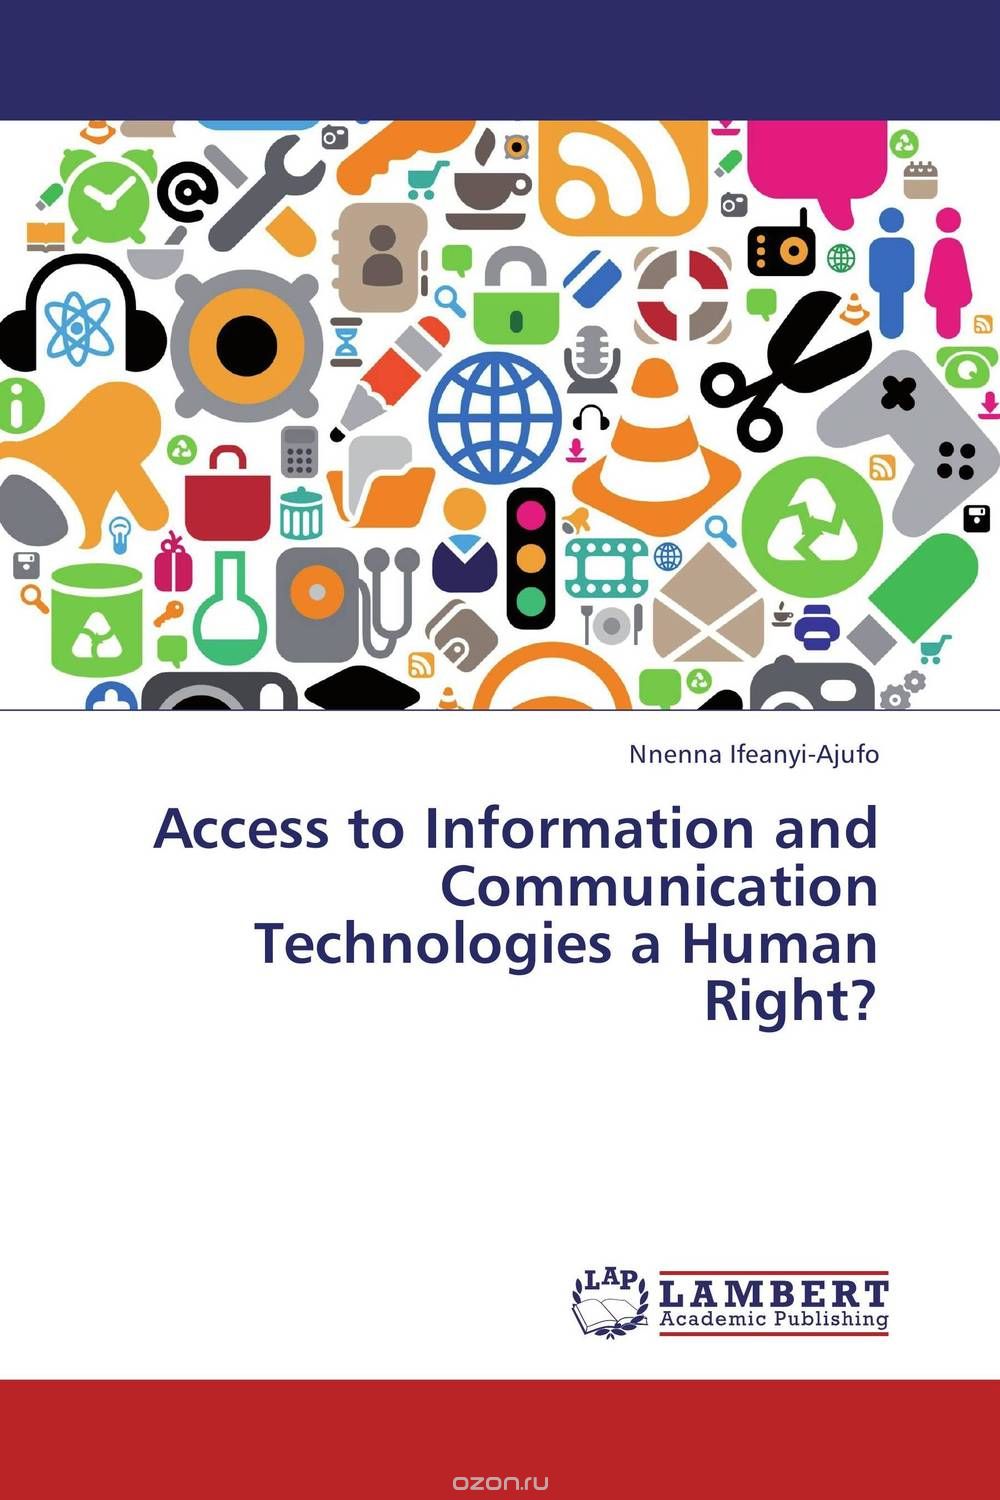 Скачать книгу "Access to Information and Communication Technologies a Human Right?"